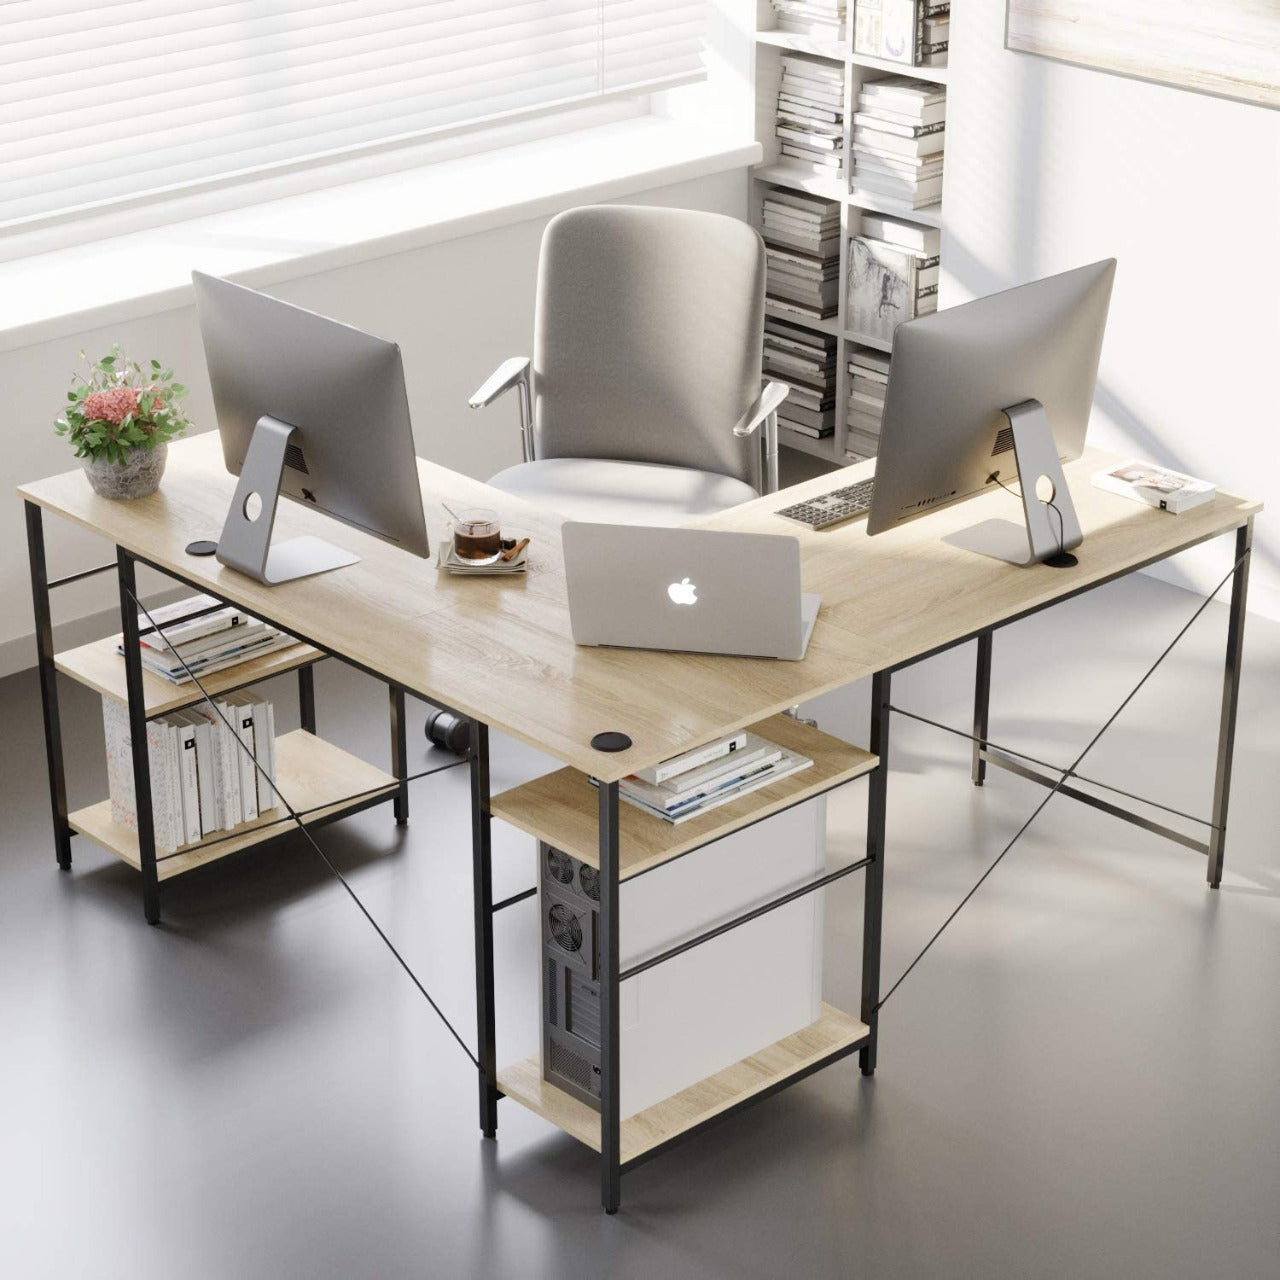 Study Table Design, Study Table With Bookshelf Design, Modern Study Table Designs